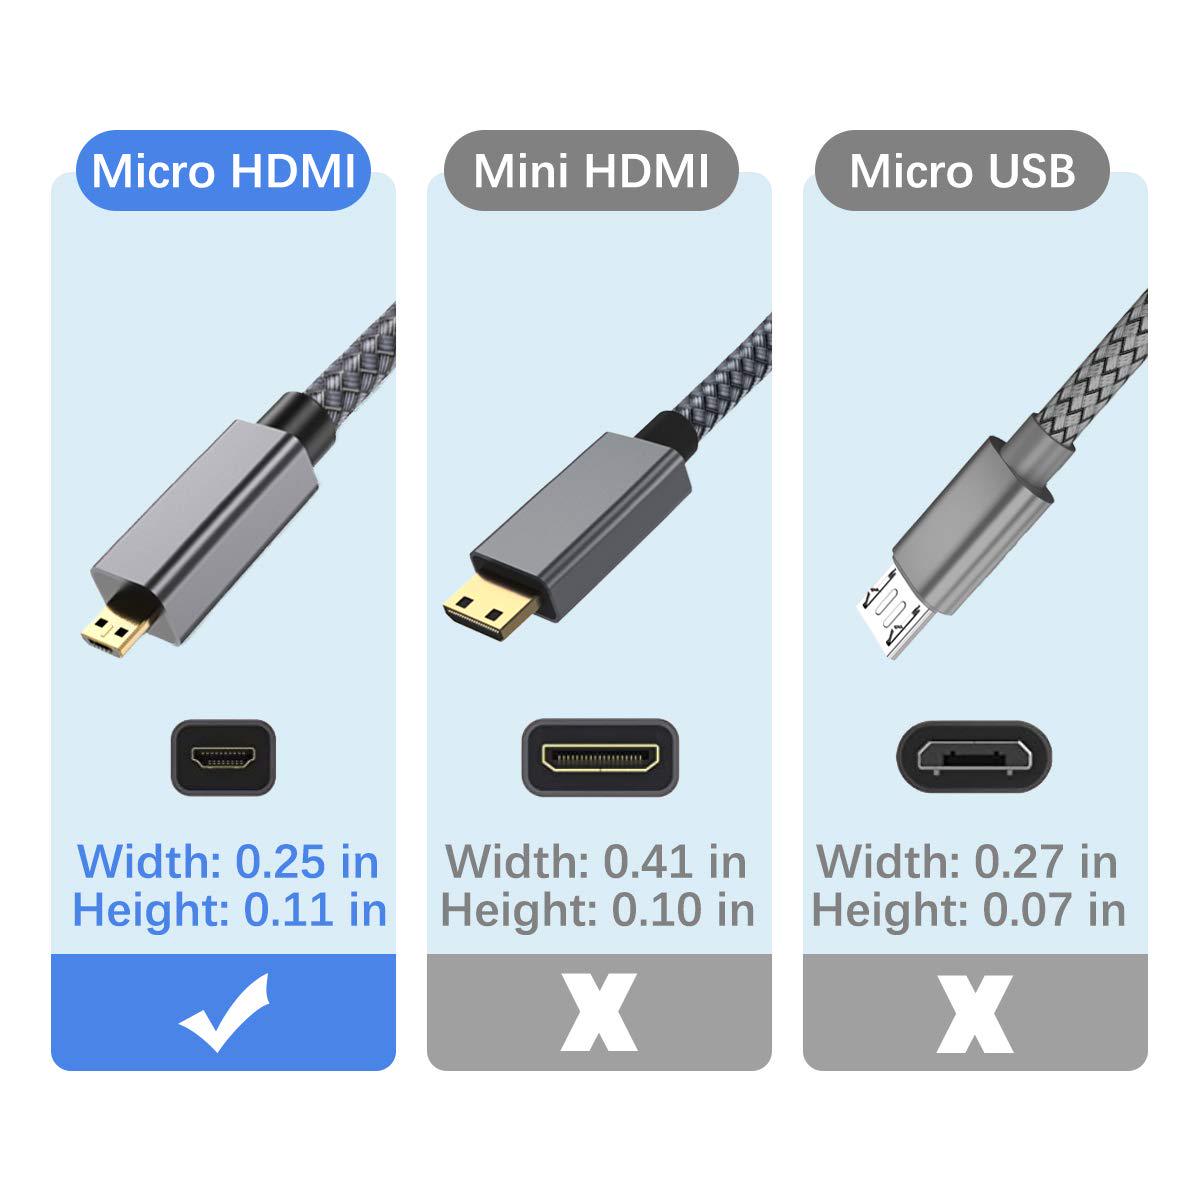 Elebase, Elebase Micro HDMI Cable 6.6 FT,4K 60Hz Micro HDMI Type D Cord Compatible for Raspberry Pi 4 4b,GoPro Black Hero 7 6 5 4,Sony Camera A6000 A6300,Nikon B500,Lenovo Yoga 3 Pro 710,Canon